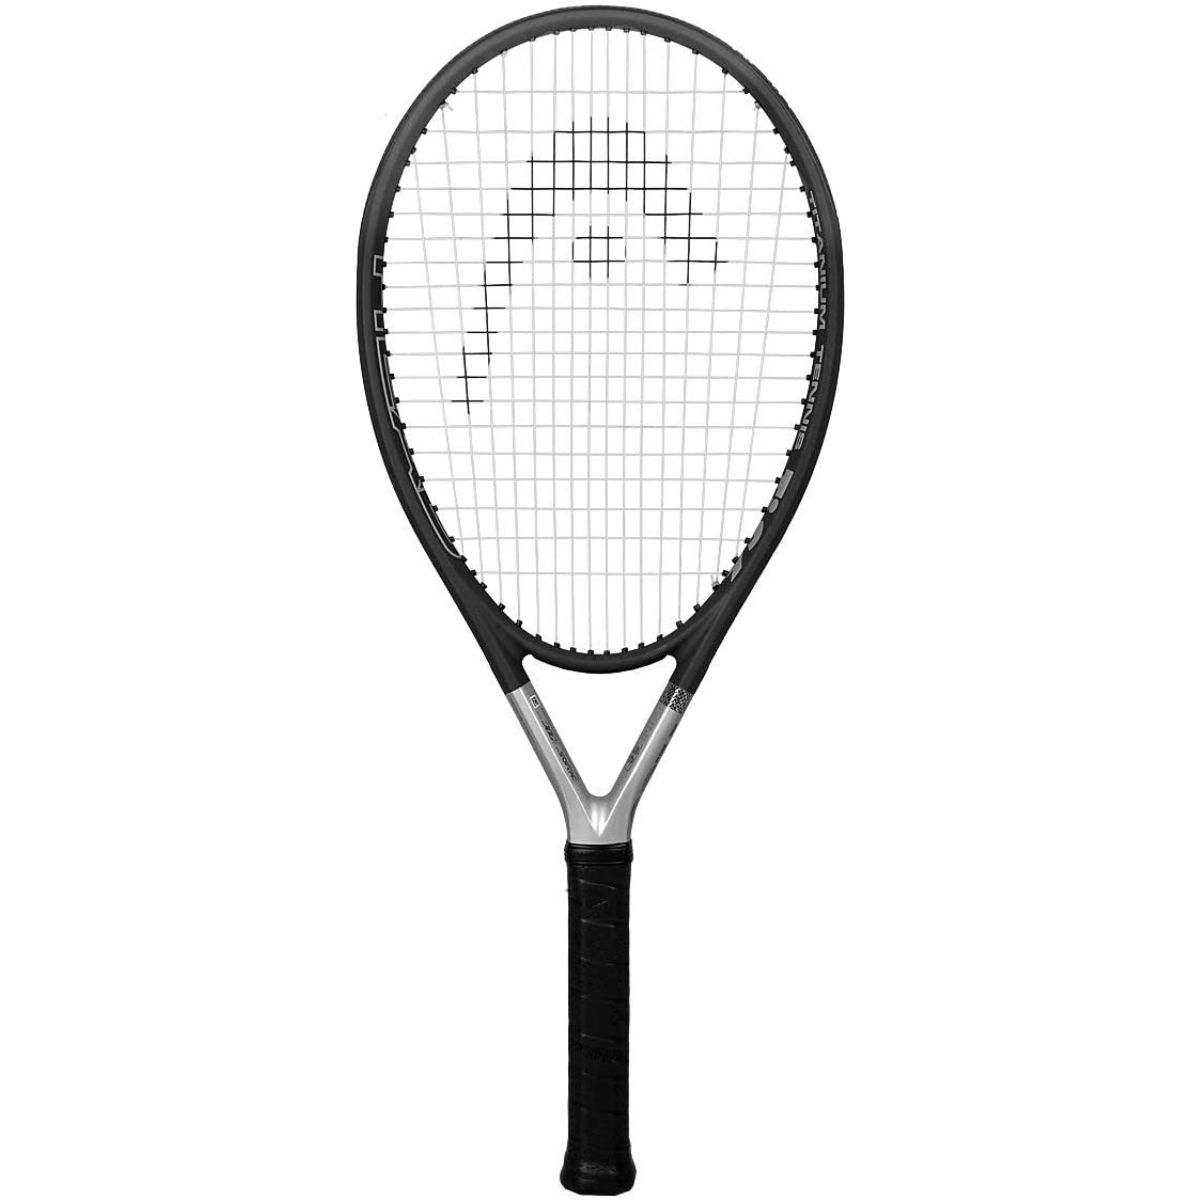 Head Ti S6 tennis racket review